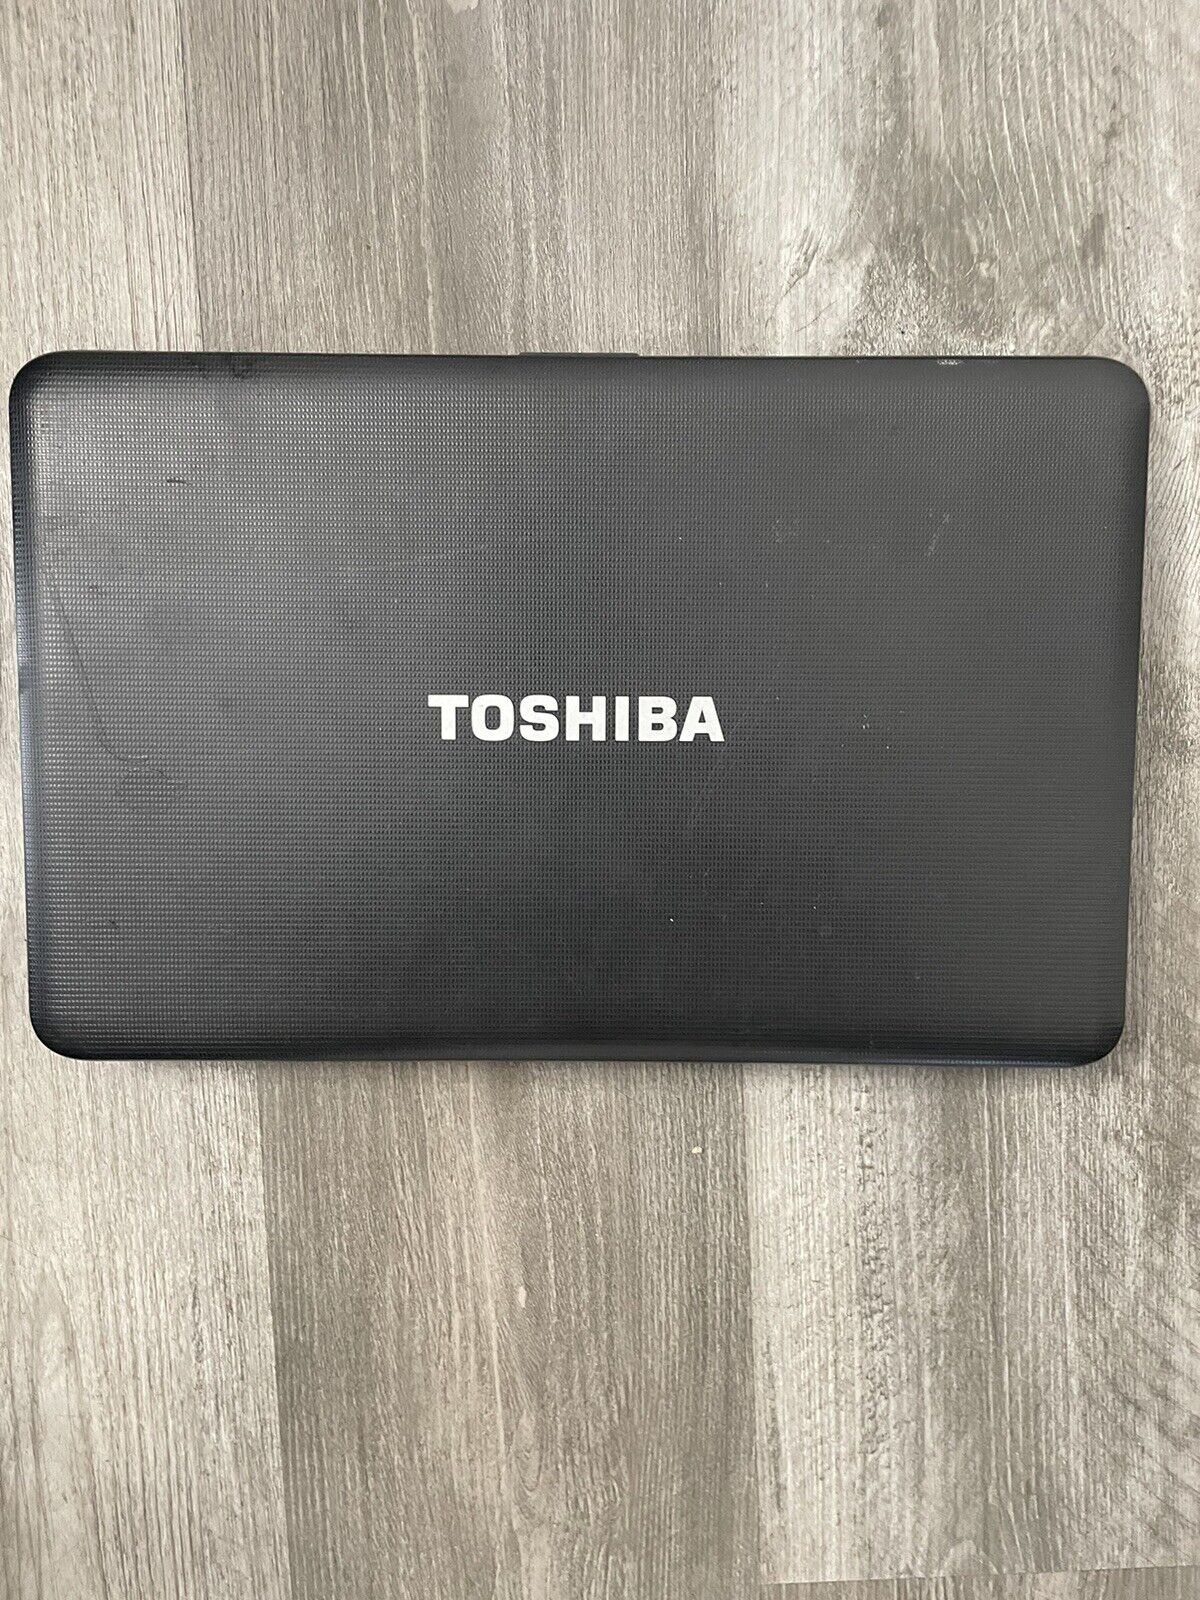 Toshiba Satellite Pro C850 Intel Laptop (parts)